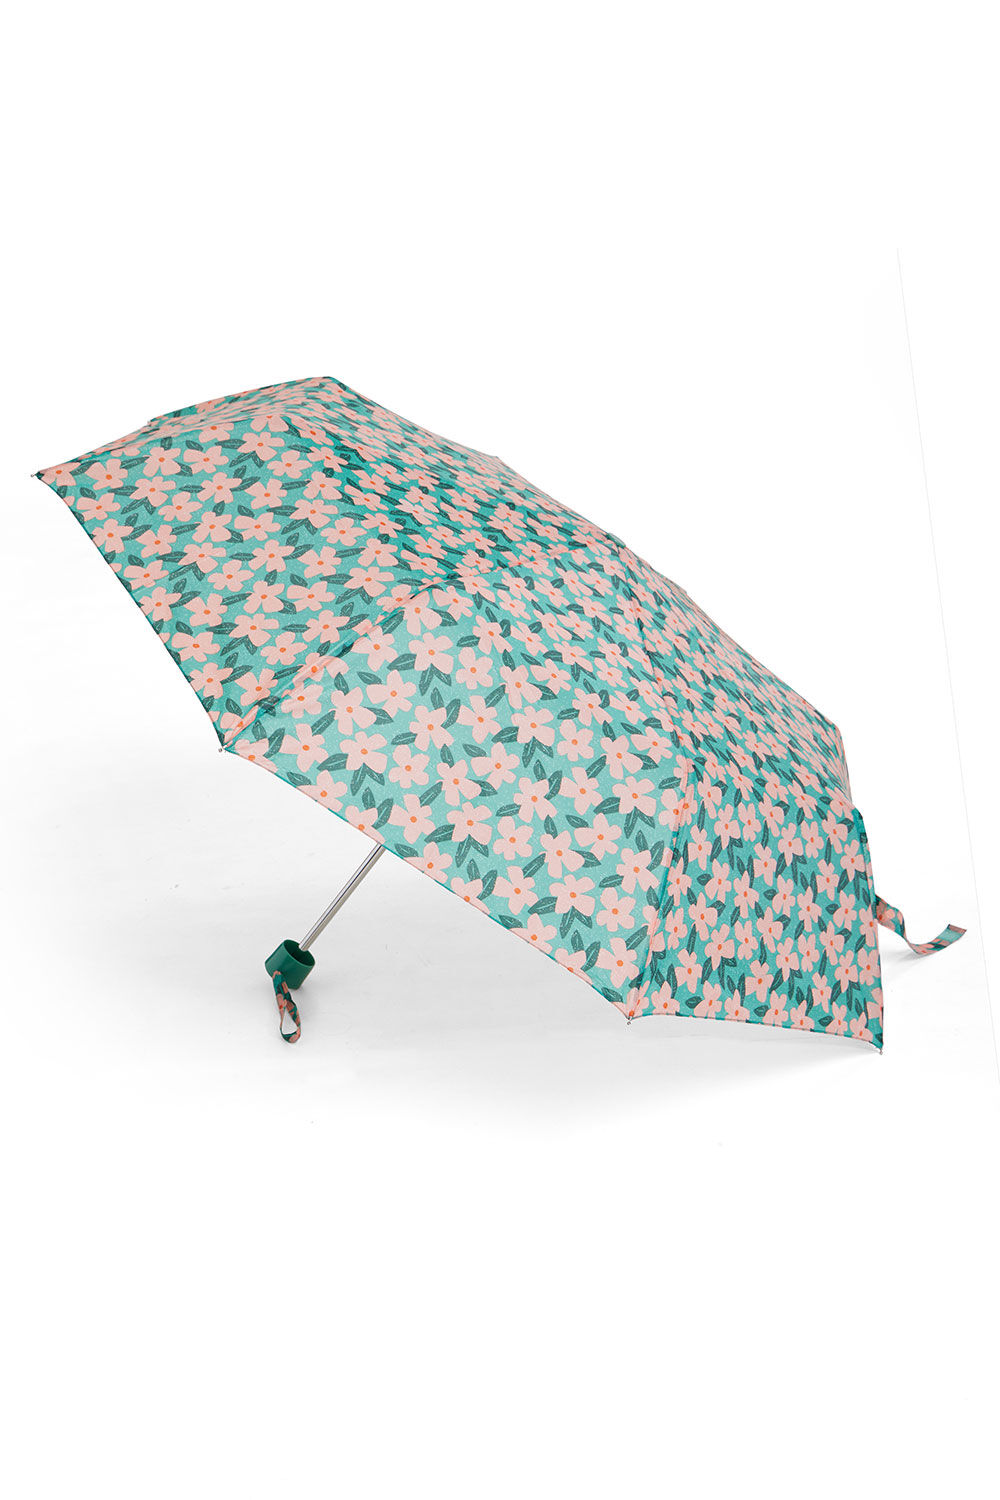 Bonmarche Women’s Green Floral Print All Over Umbrella